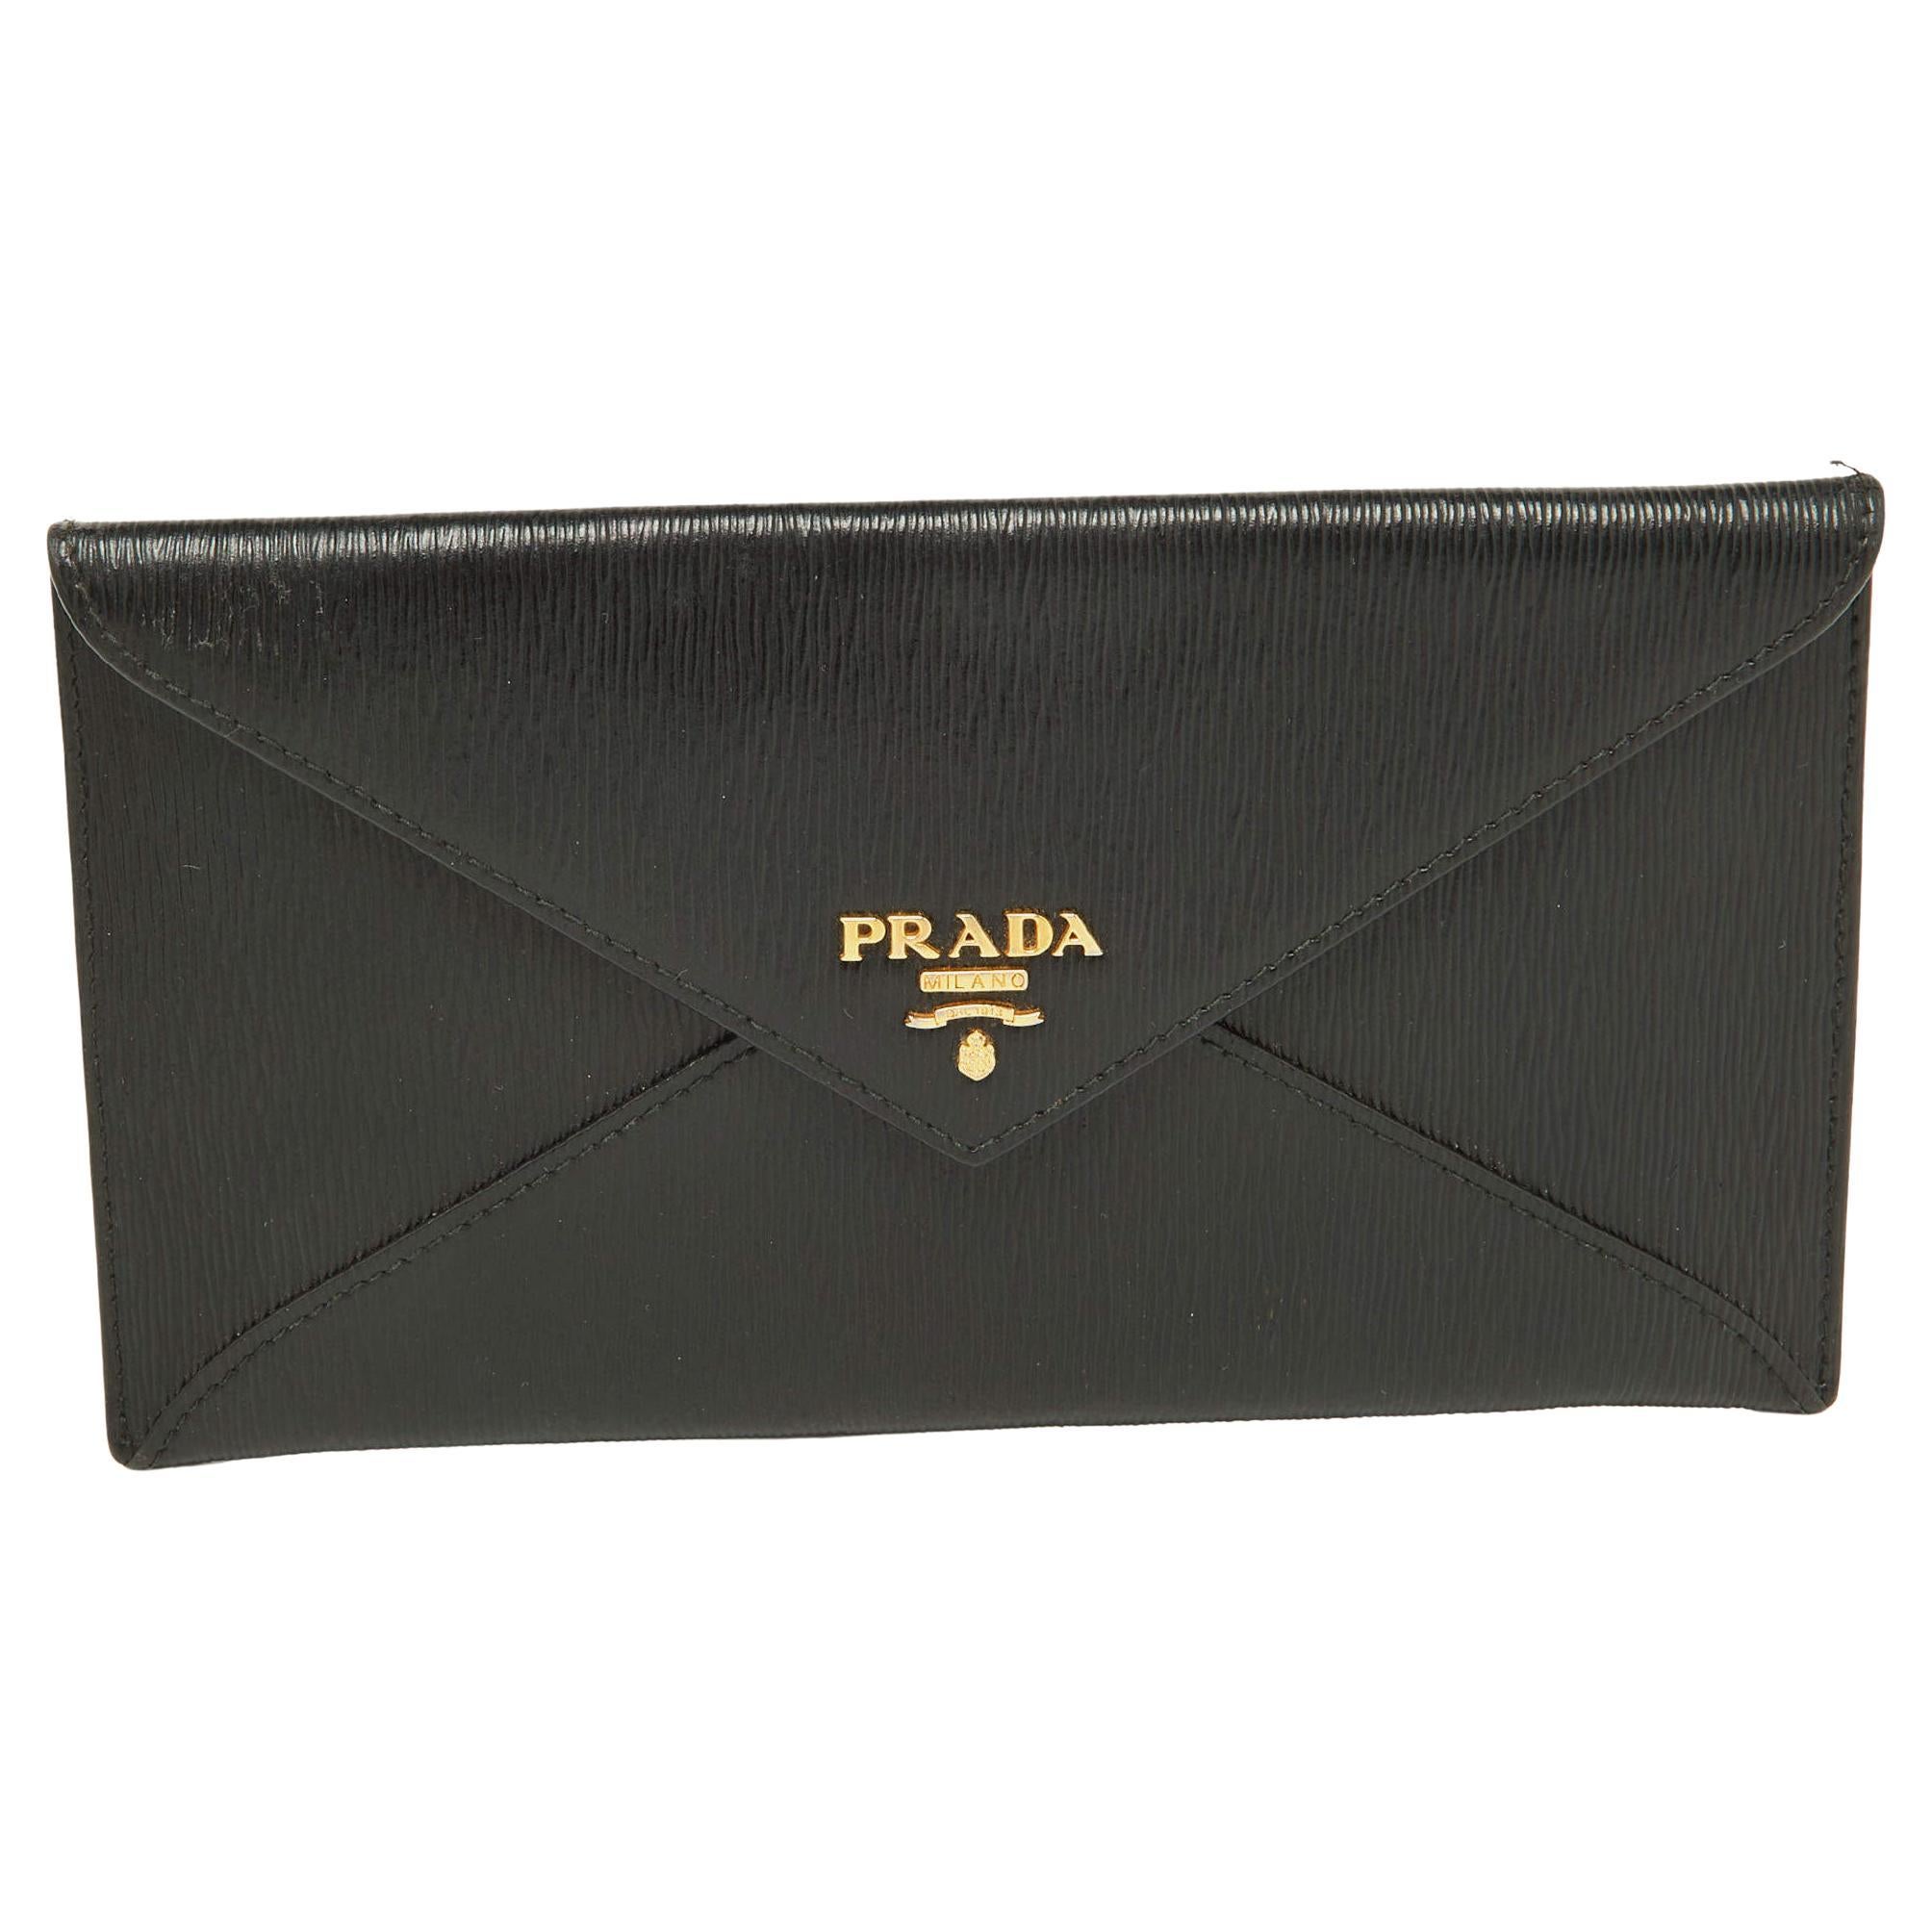 Prada Black Move Leather Envelope Slim Wallet